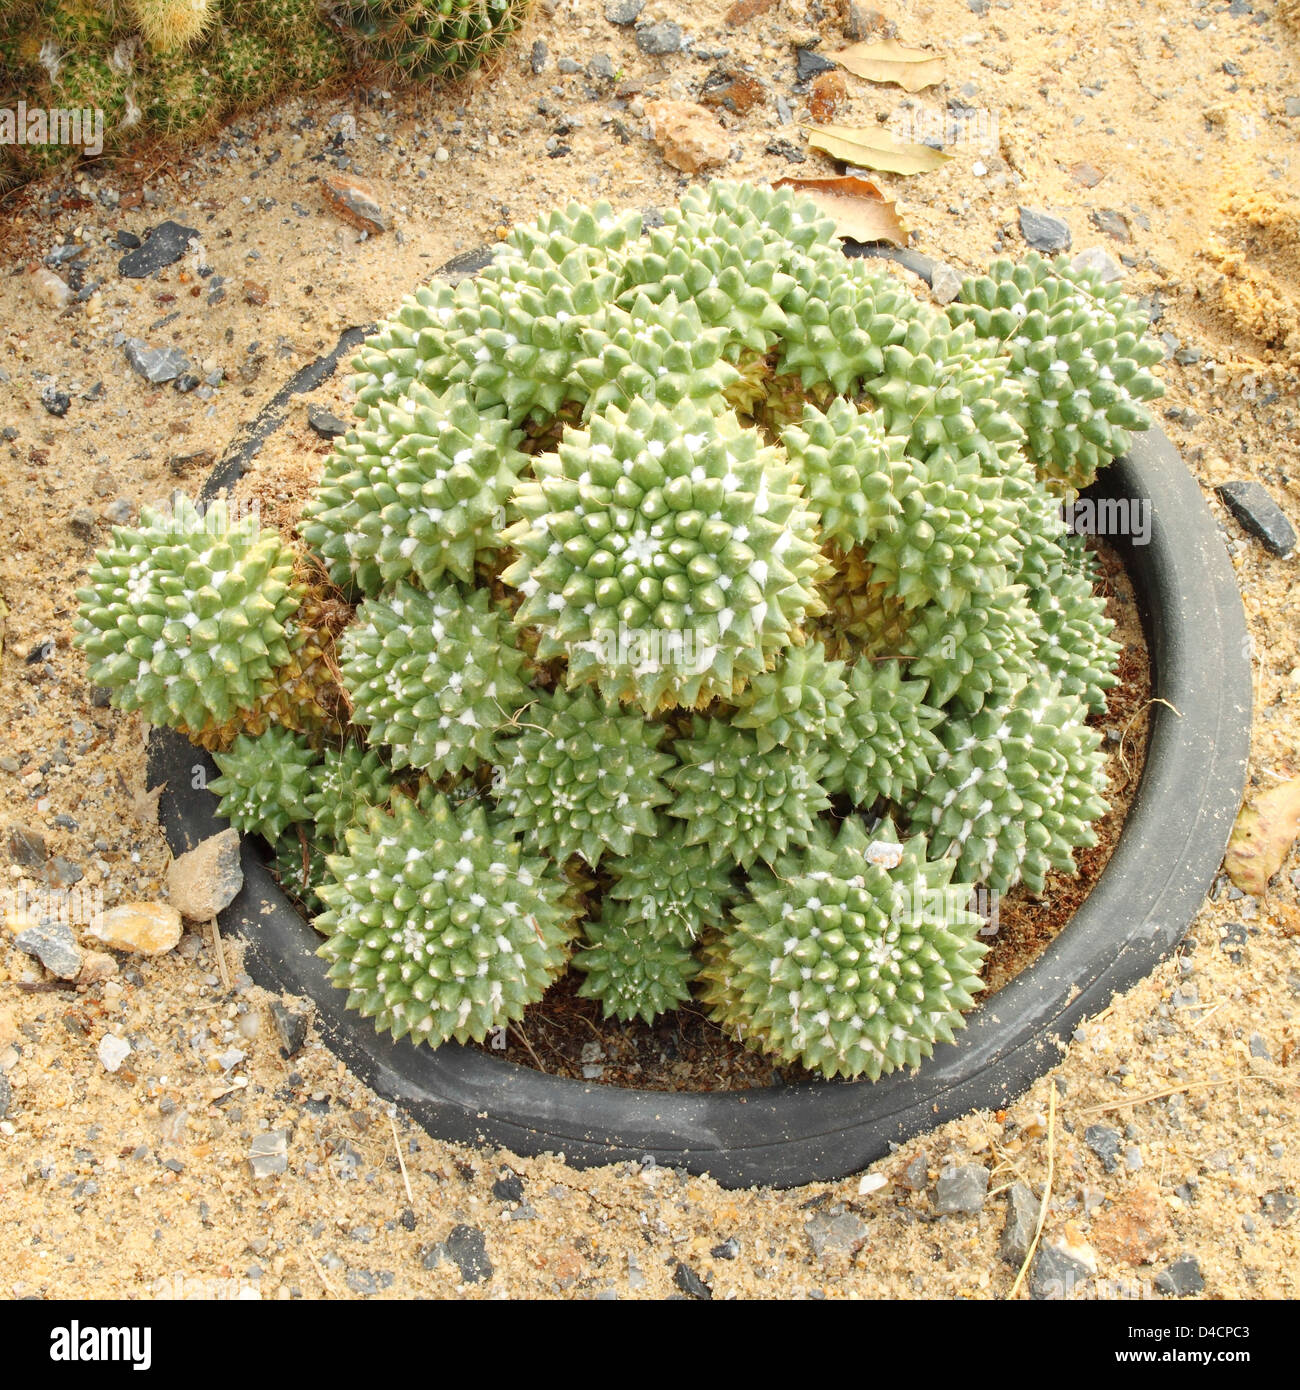 cactus in the desert park Stock Photo